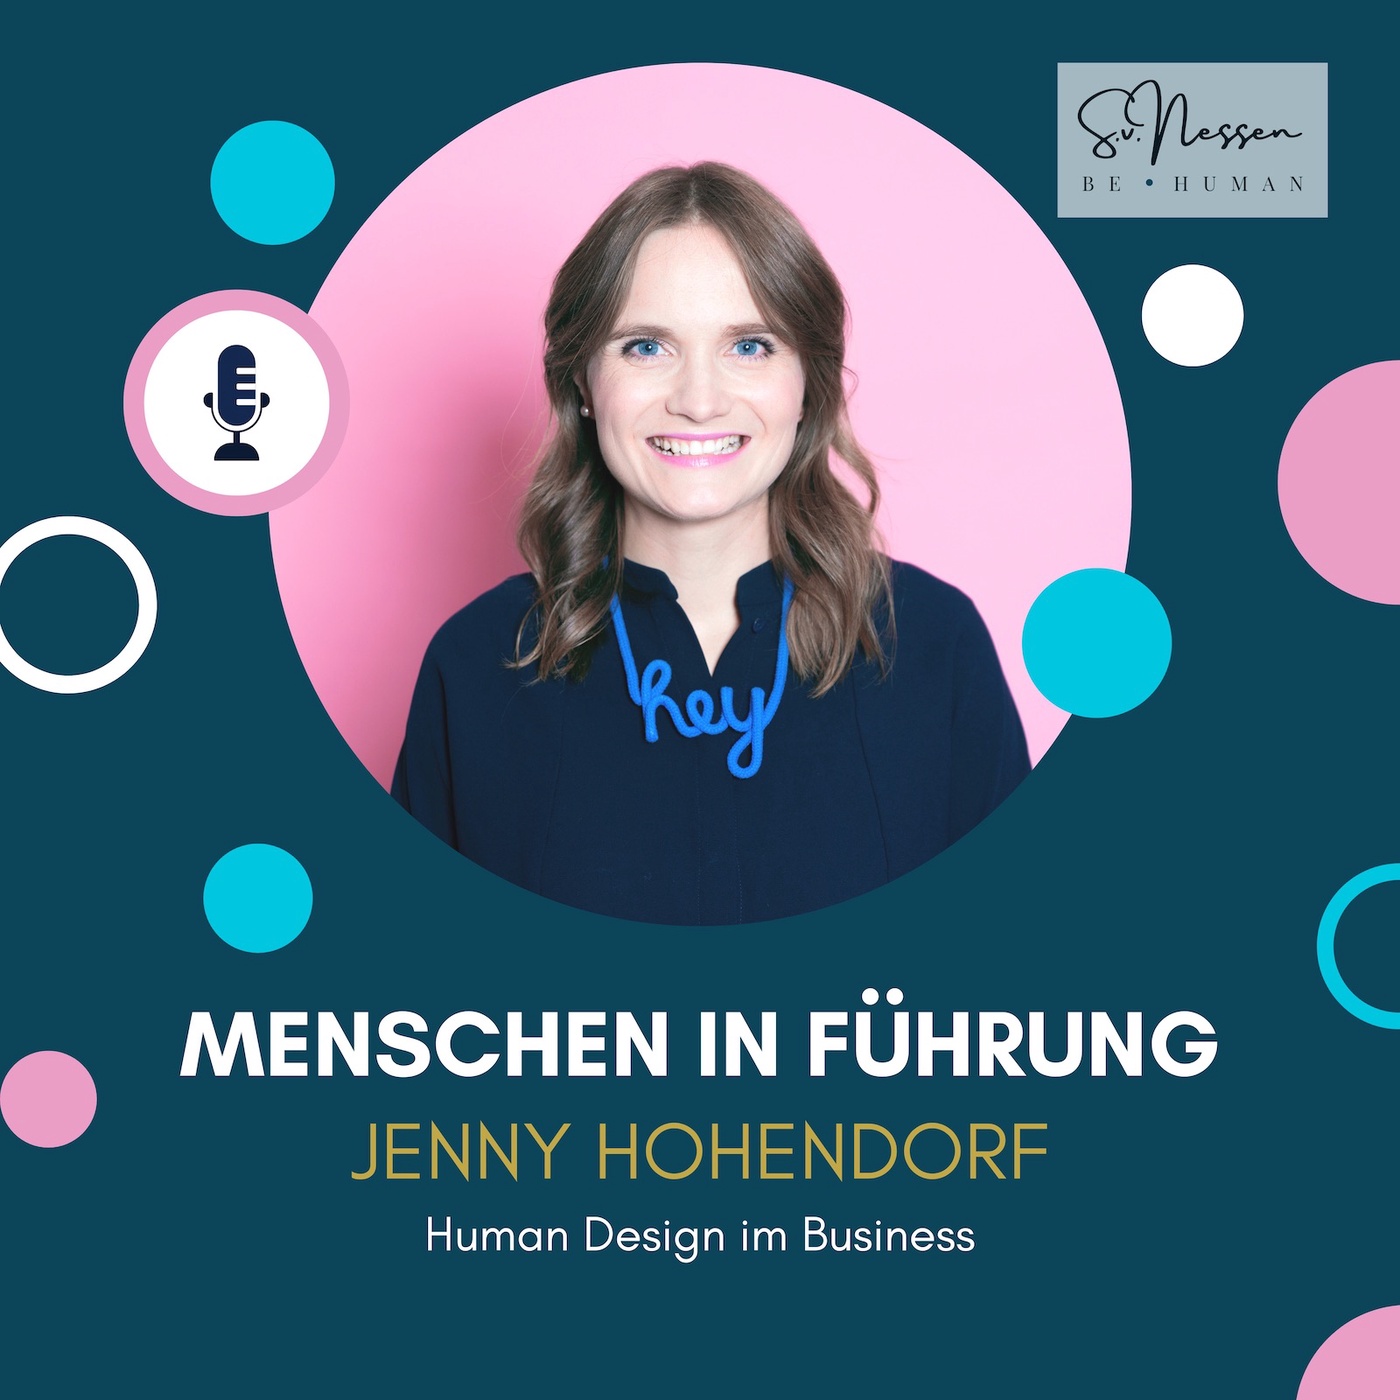 Human Design im Business mit Jenny Hohendorf